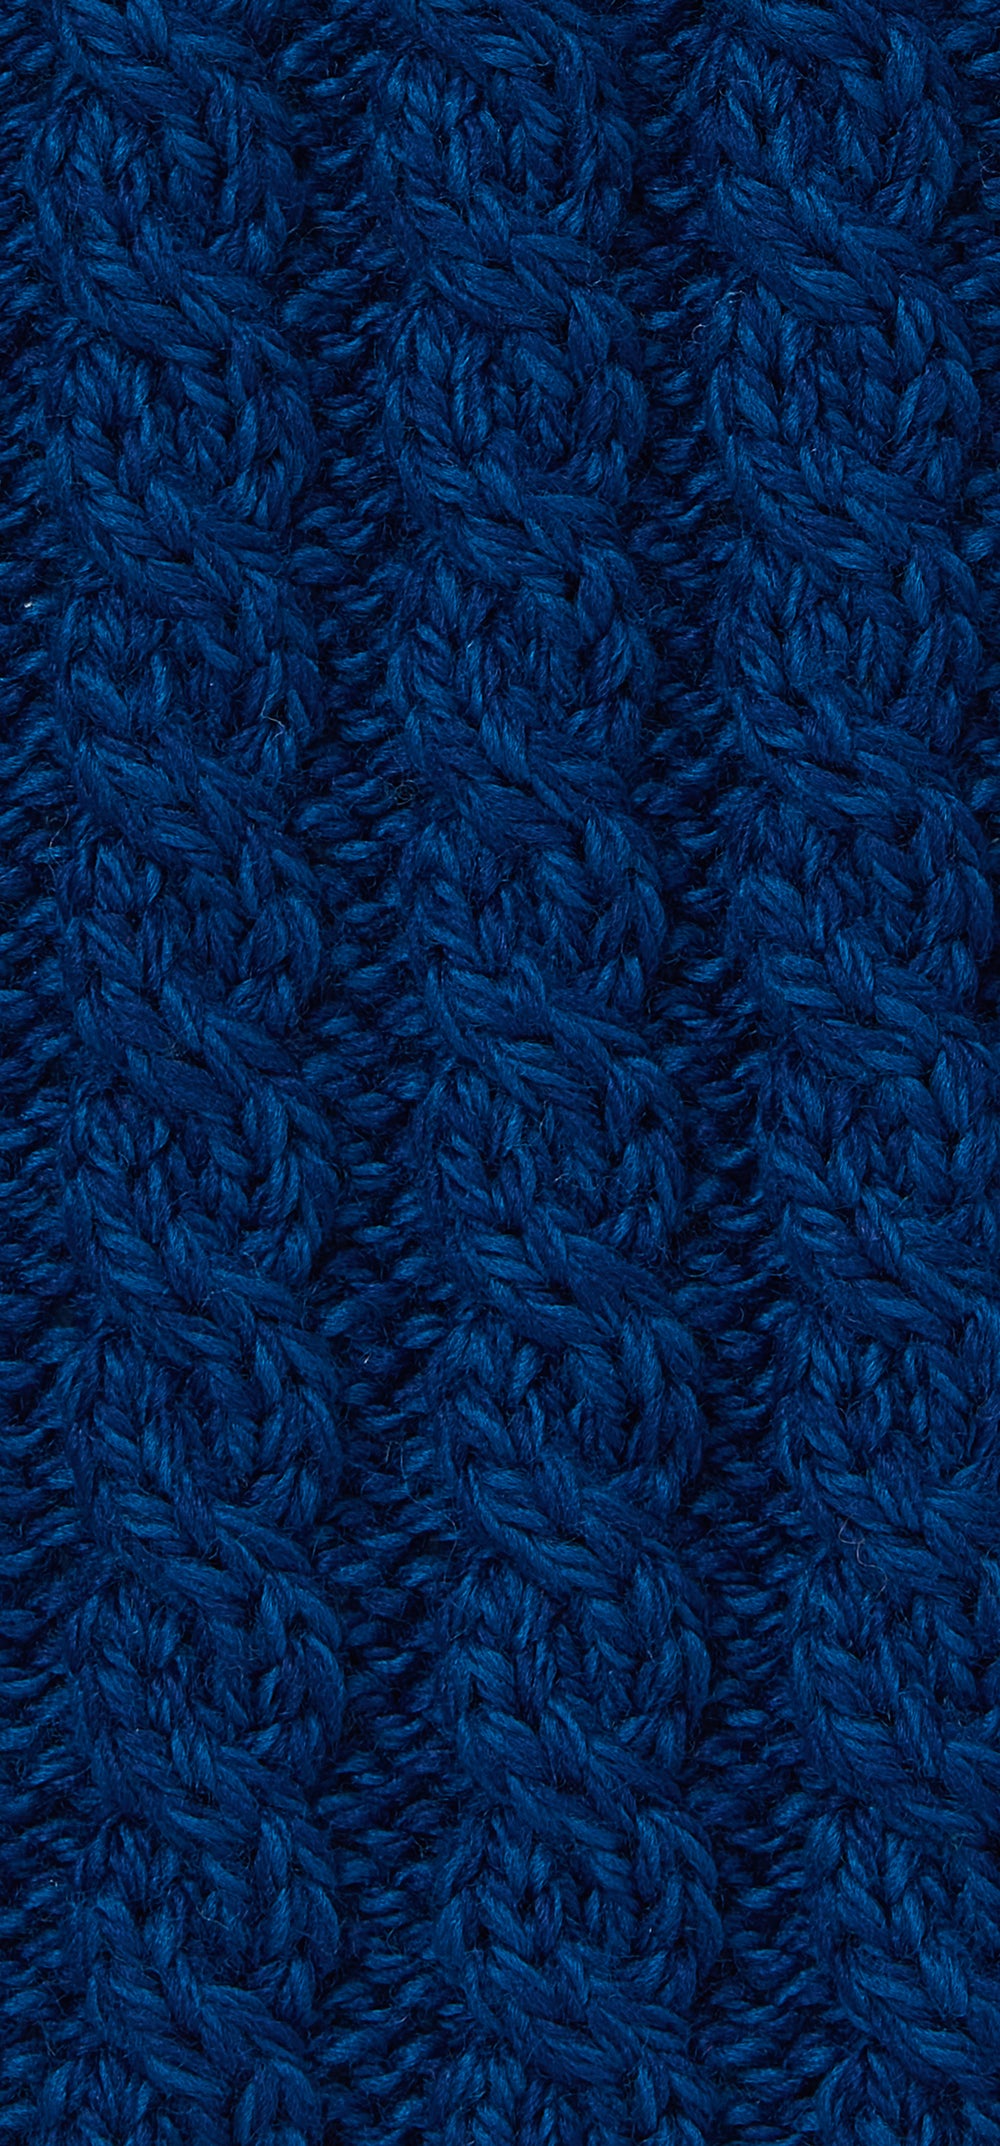 Aran Wool Super Soft  Crew Pullover Sweater Deep Blue (B689 784)